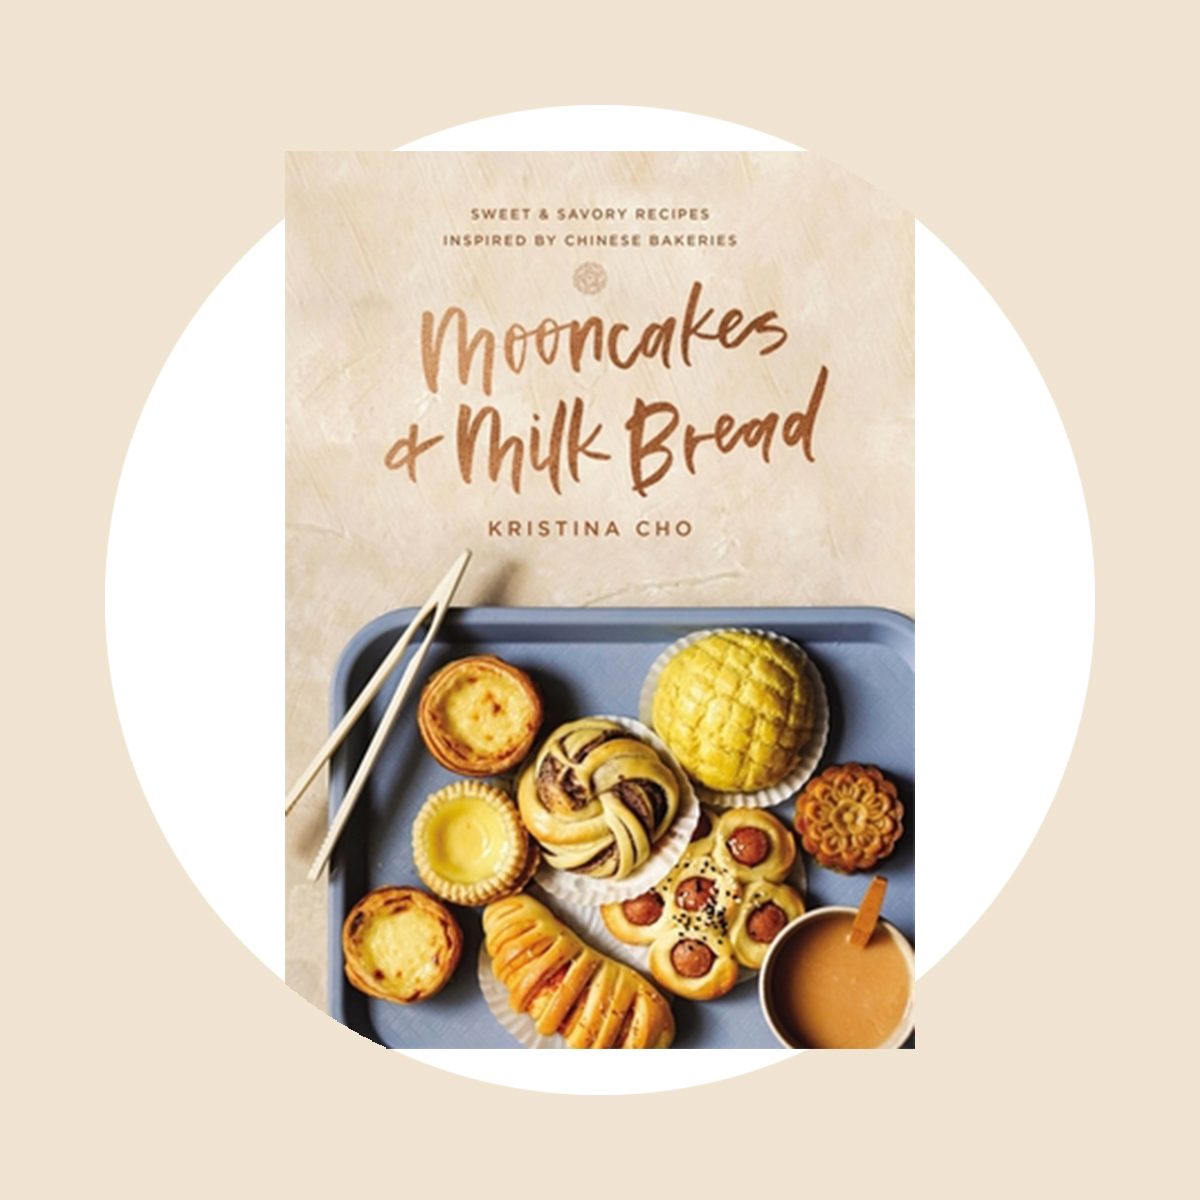 https://www.tasteofhome.com/wp-content/uploads/2020/05/mooncakes-and-milk-bread-cookbook-via-bookshop.org-ecomm.jpg?fit=700%2C700